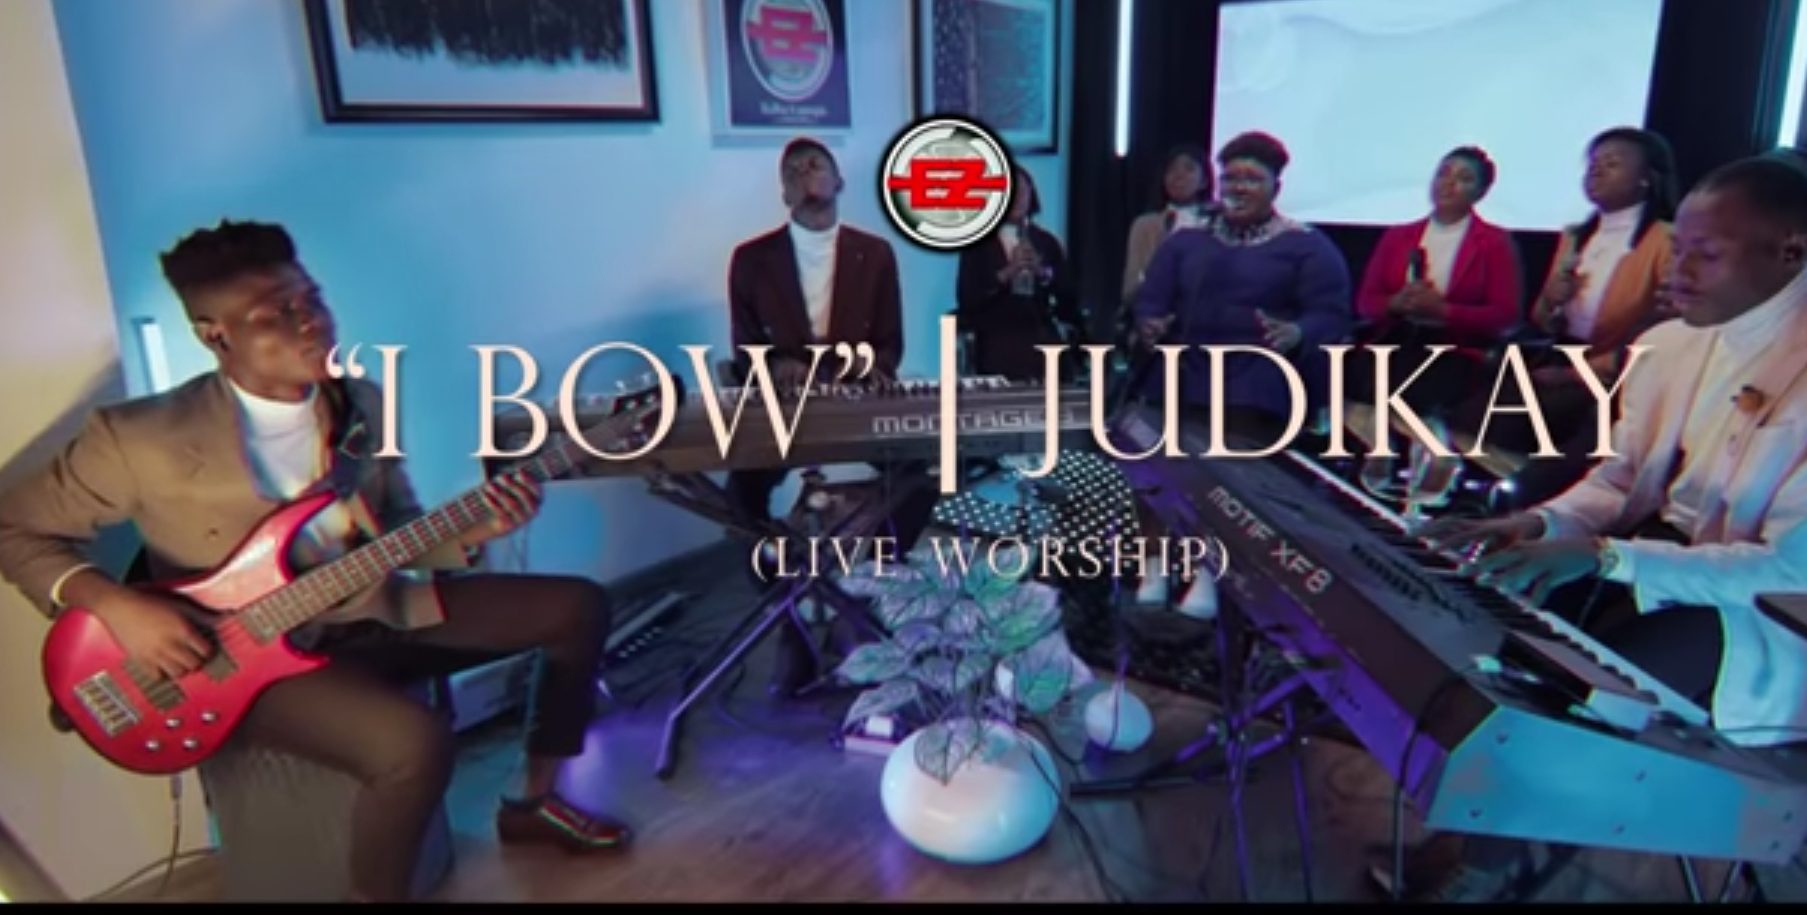 Download Music: I Bow - Judikay